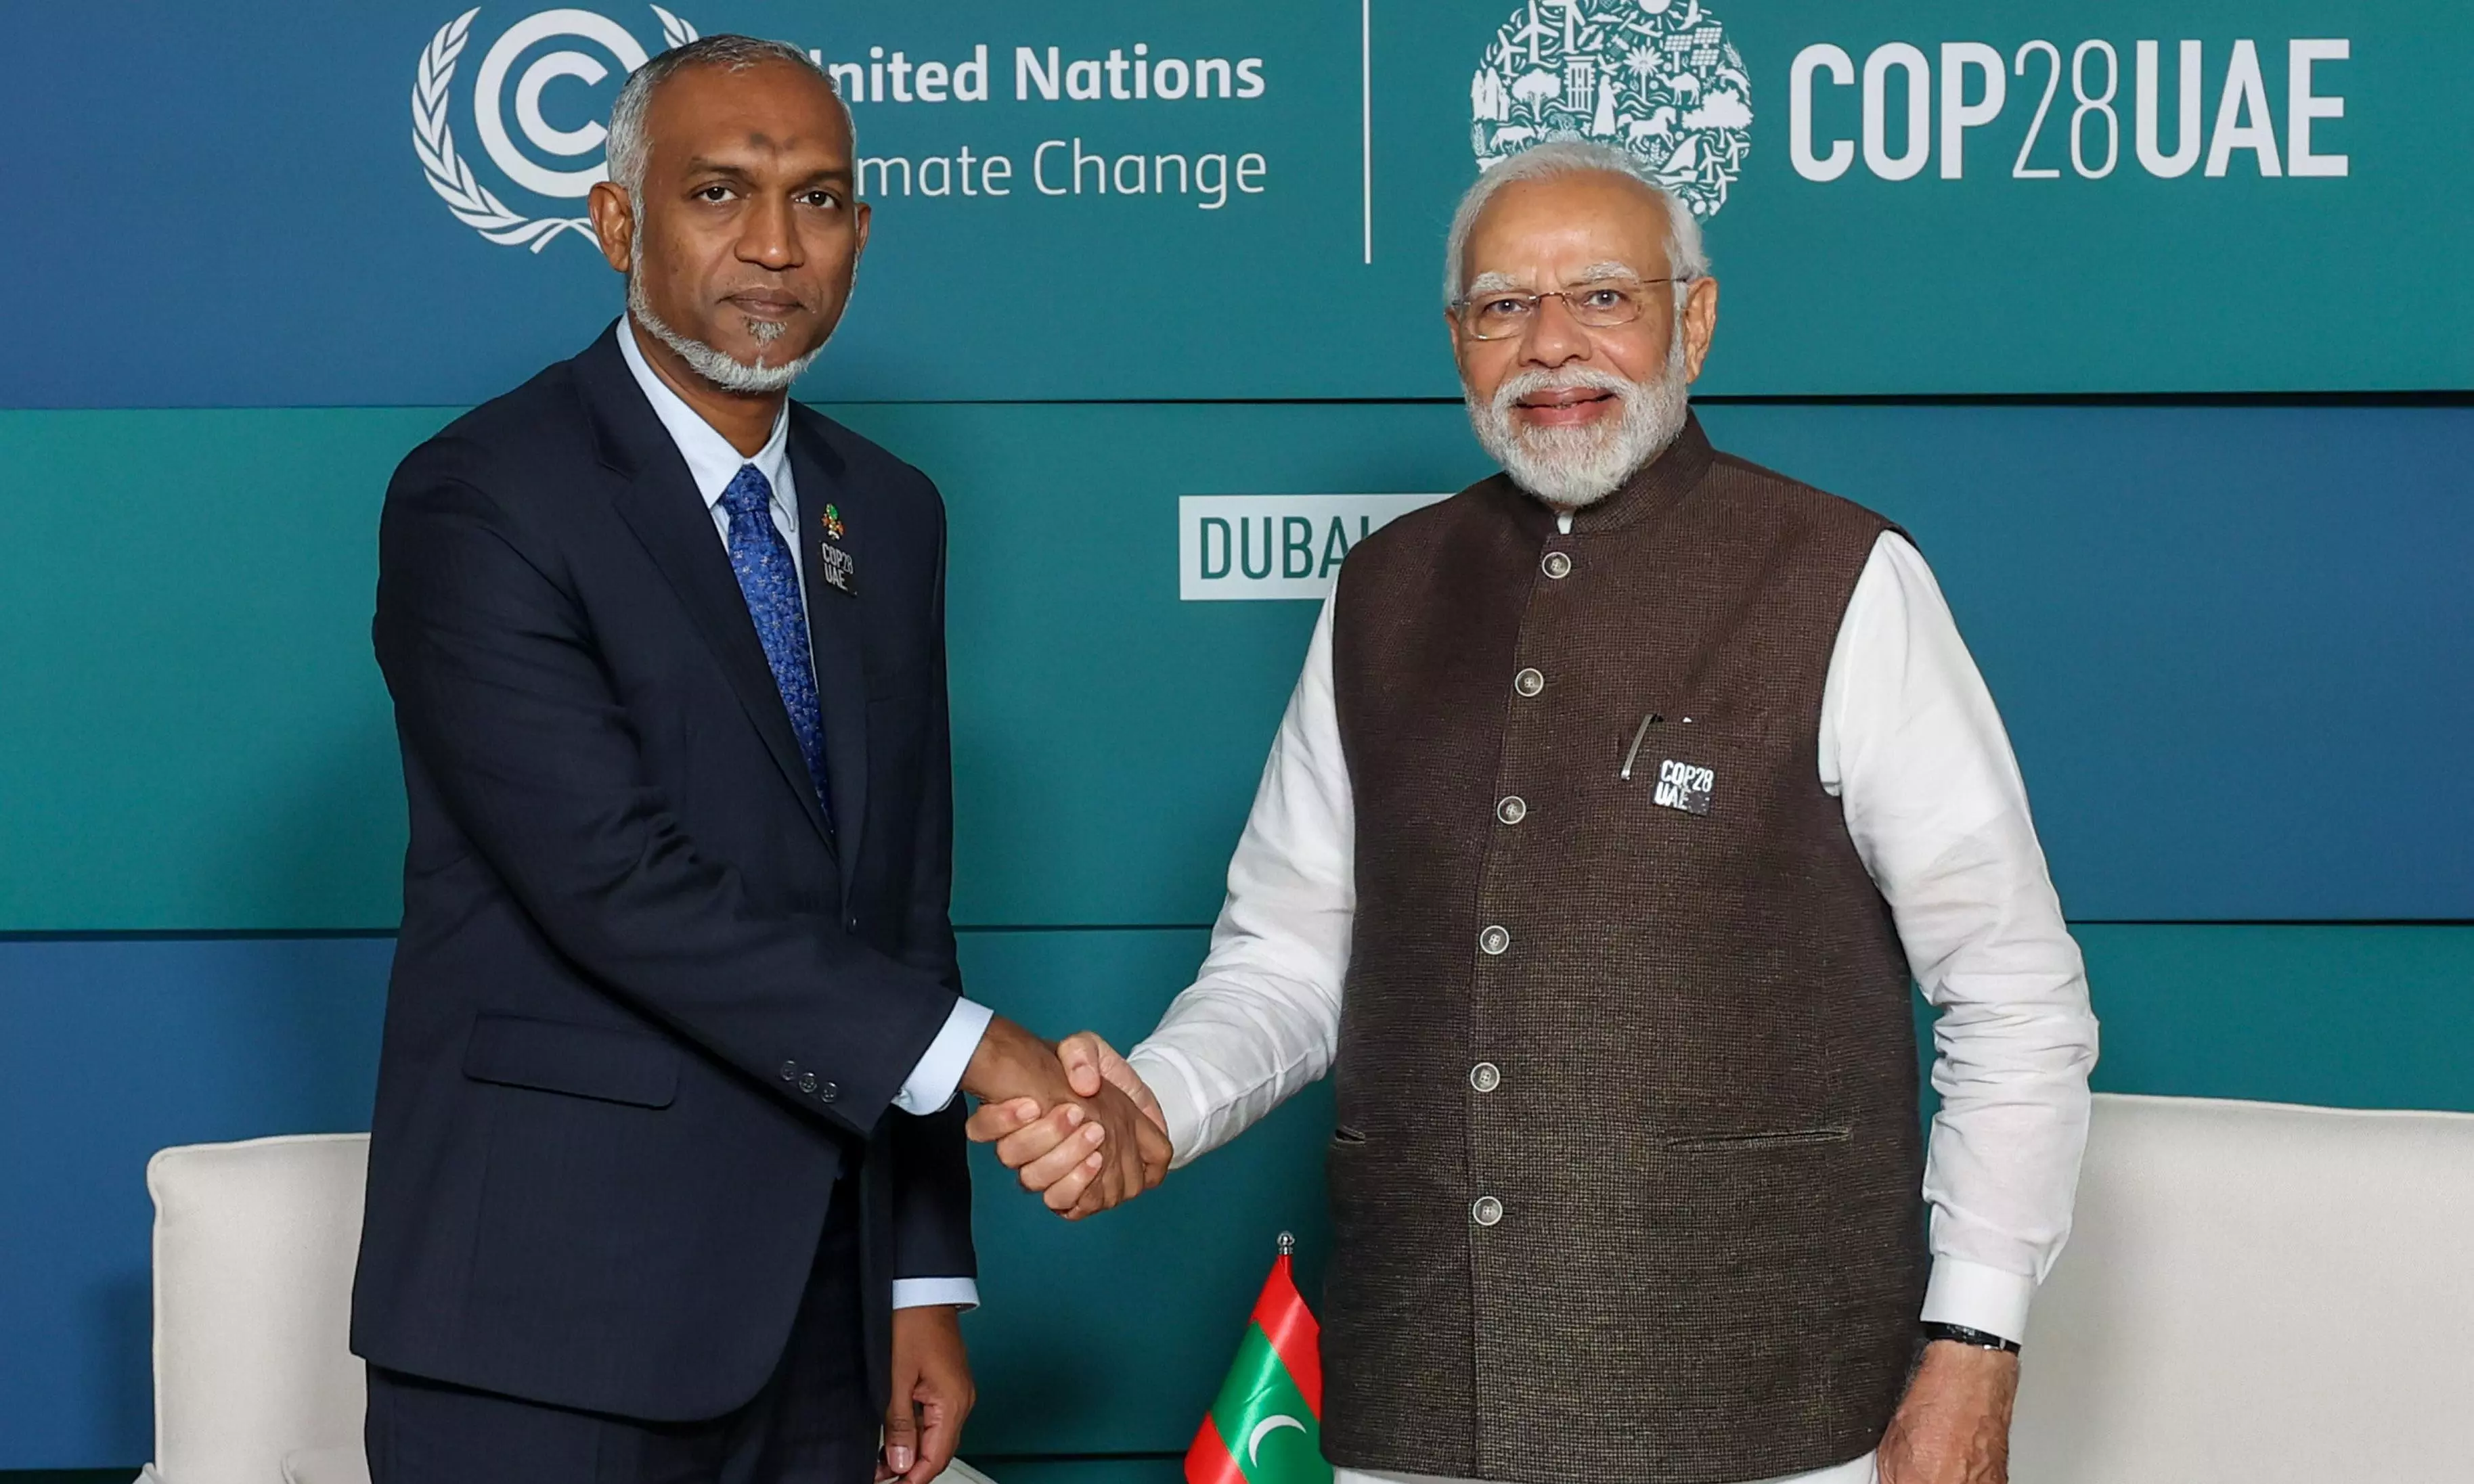 Probal DasGupta | From Maldives & beyond: Why India needs the neighbourhood